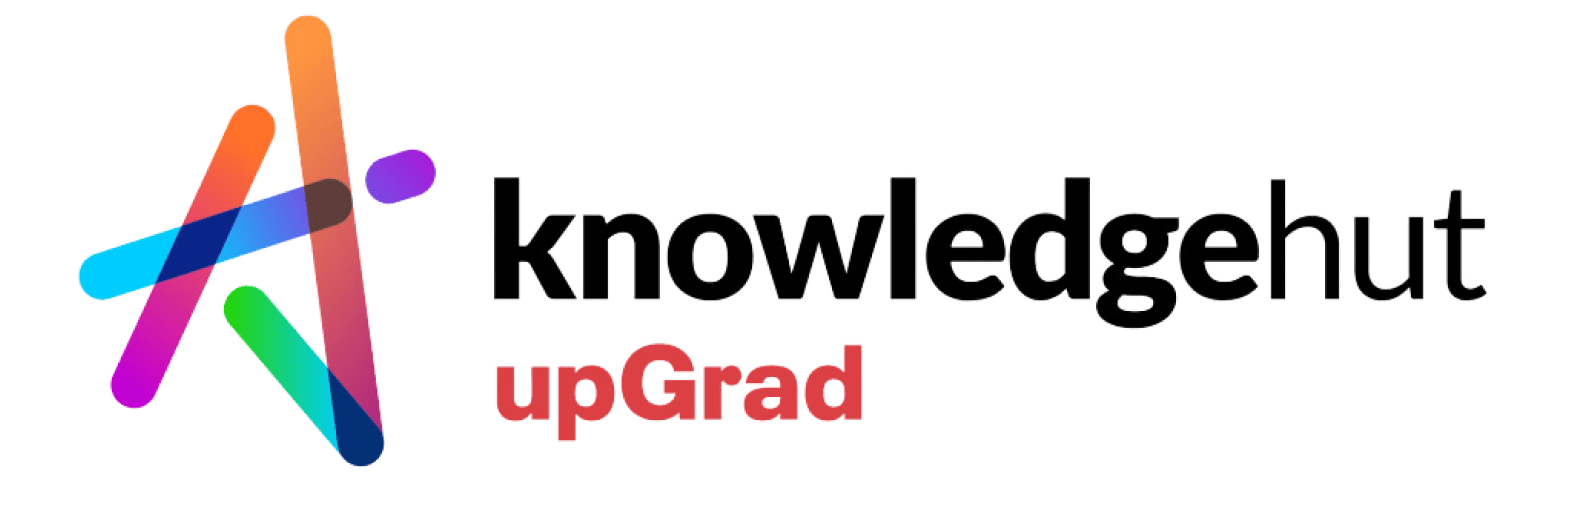 knowledge upgard